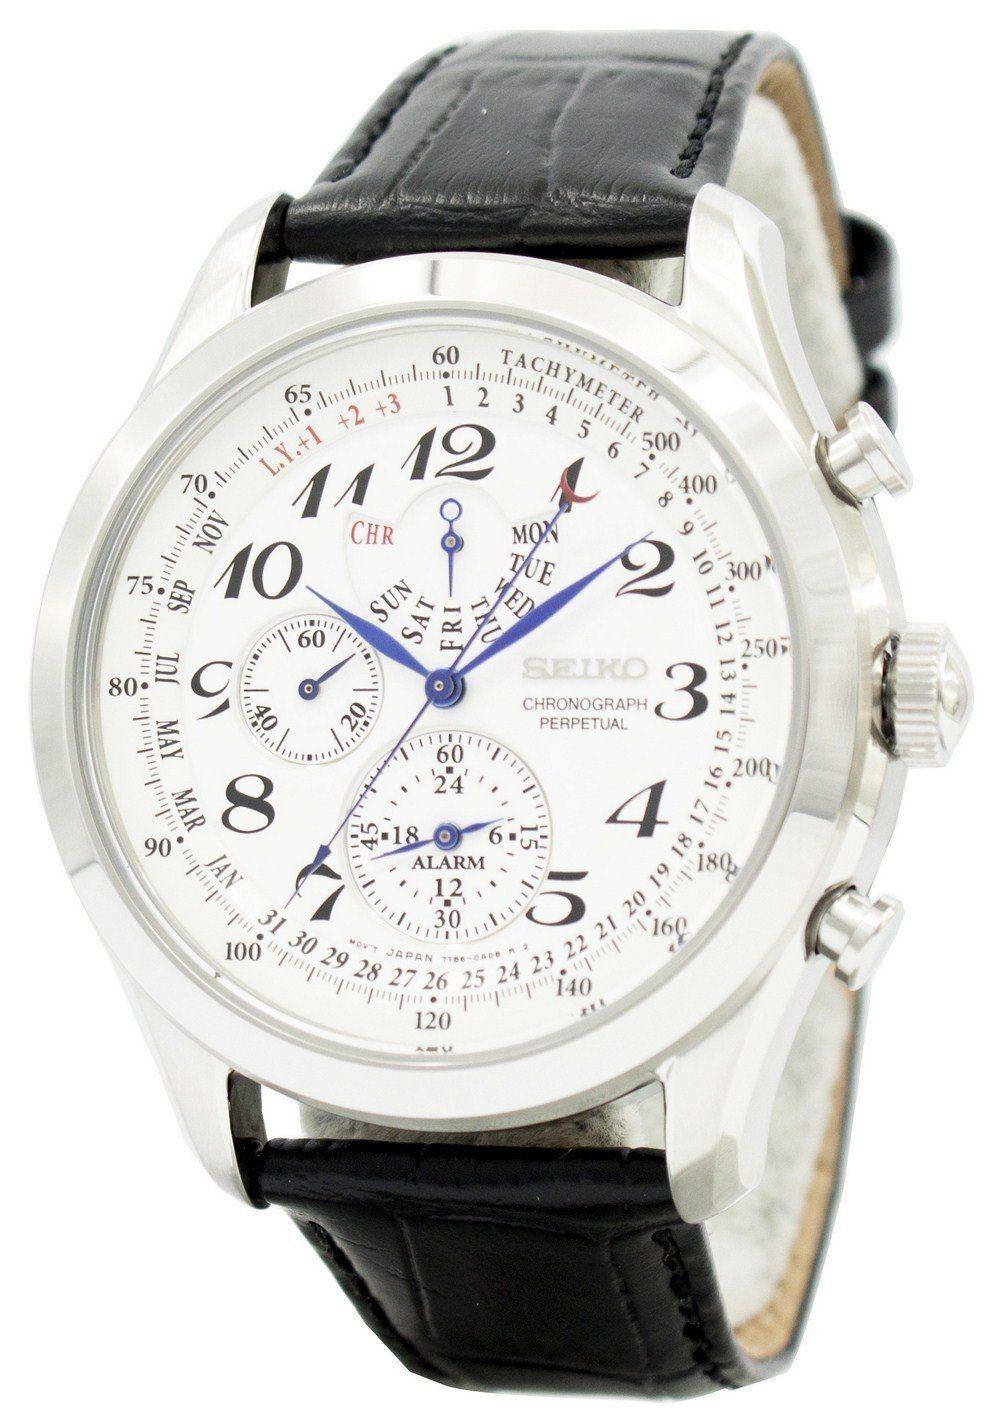 Seiko Chronograph Perpetual Calendar SPC131P1 SPC131P MEN S Watch eBay